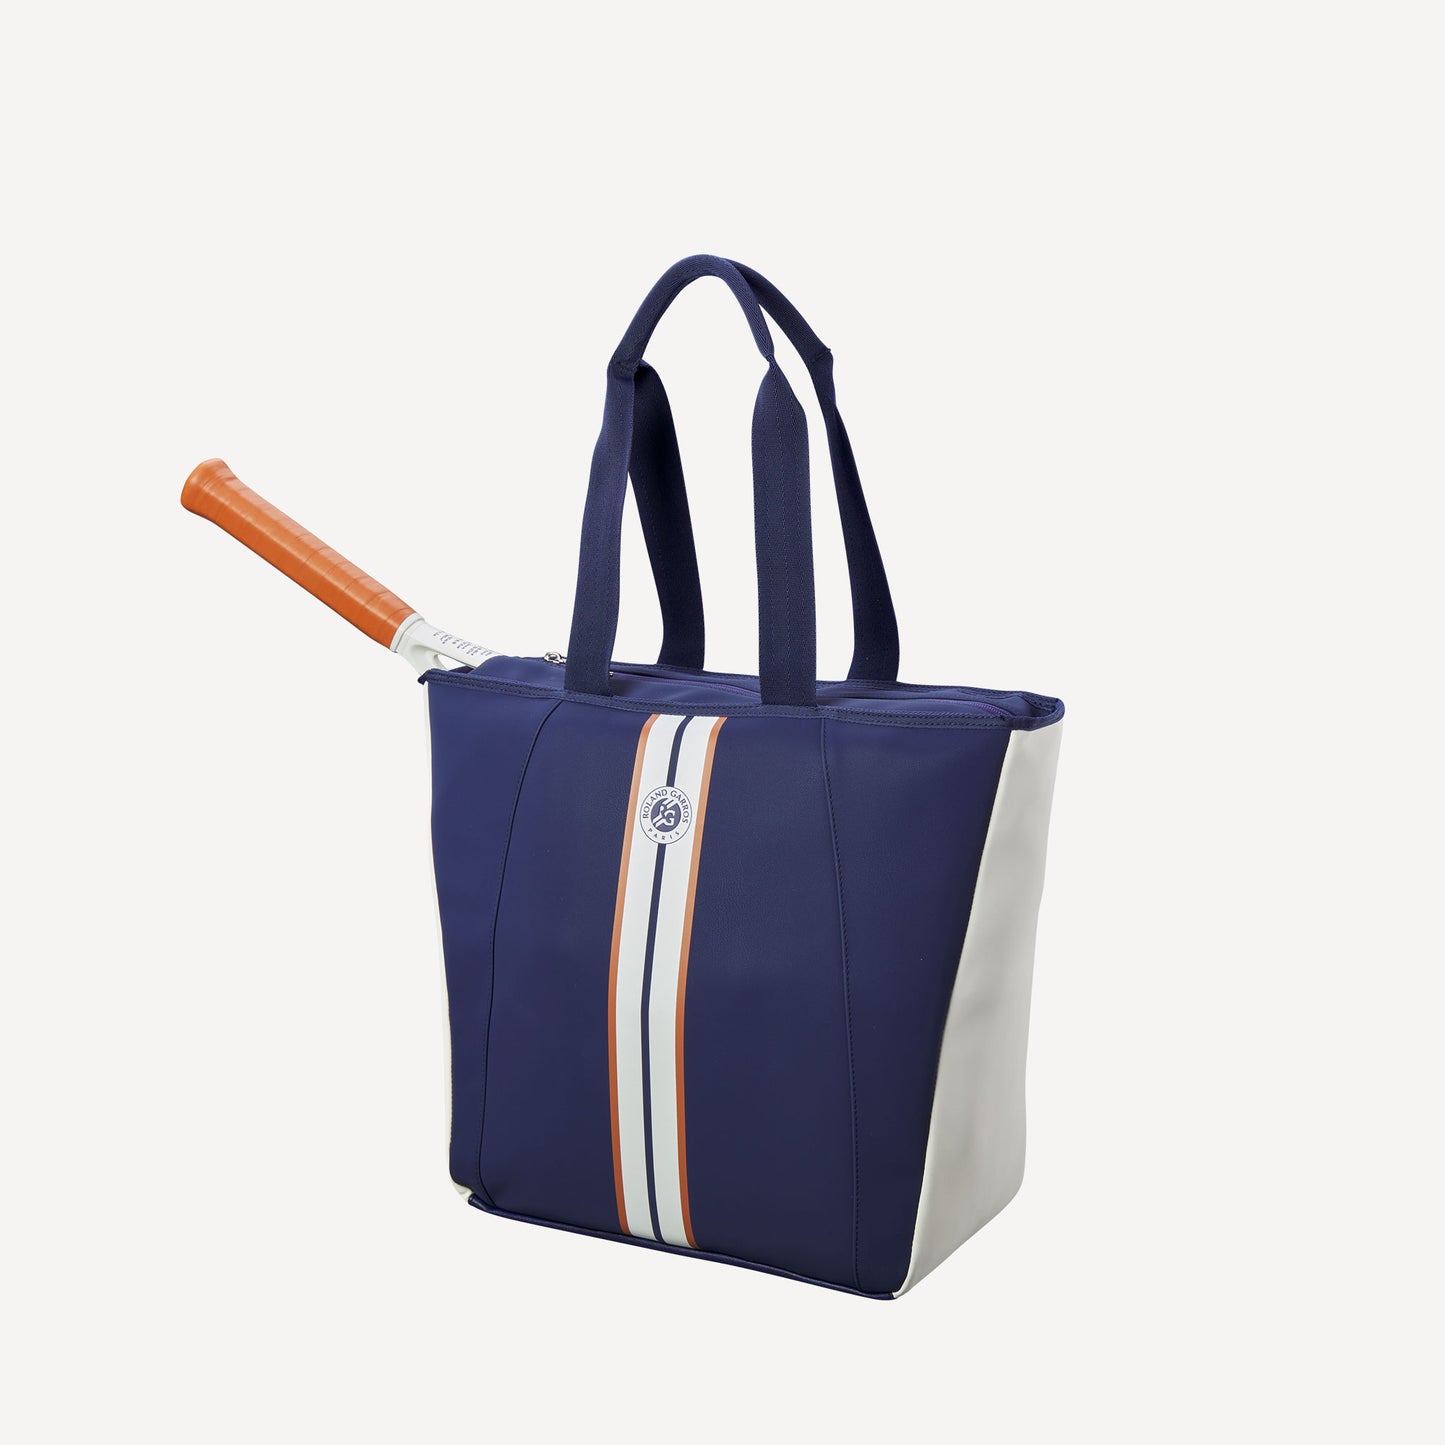 Wilson Roland-Garros Premium Tennis Tote Bag Blue (2)